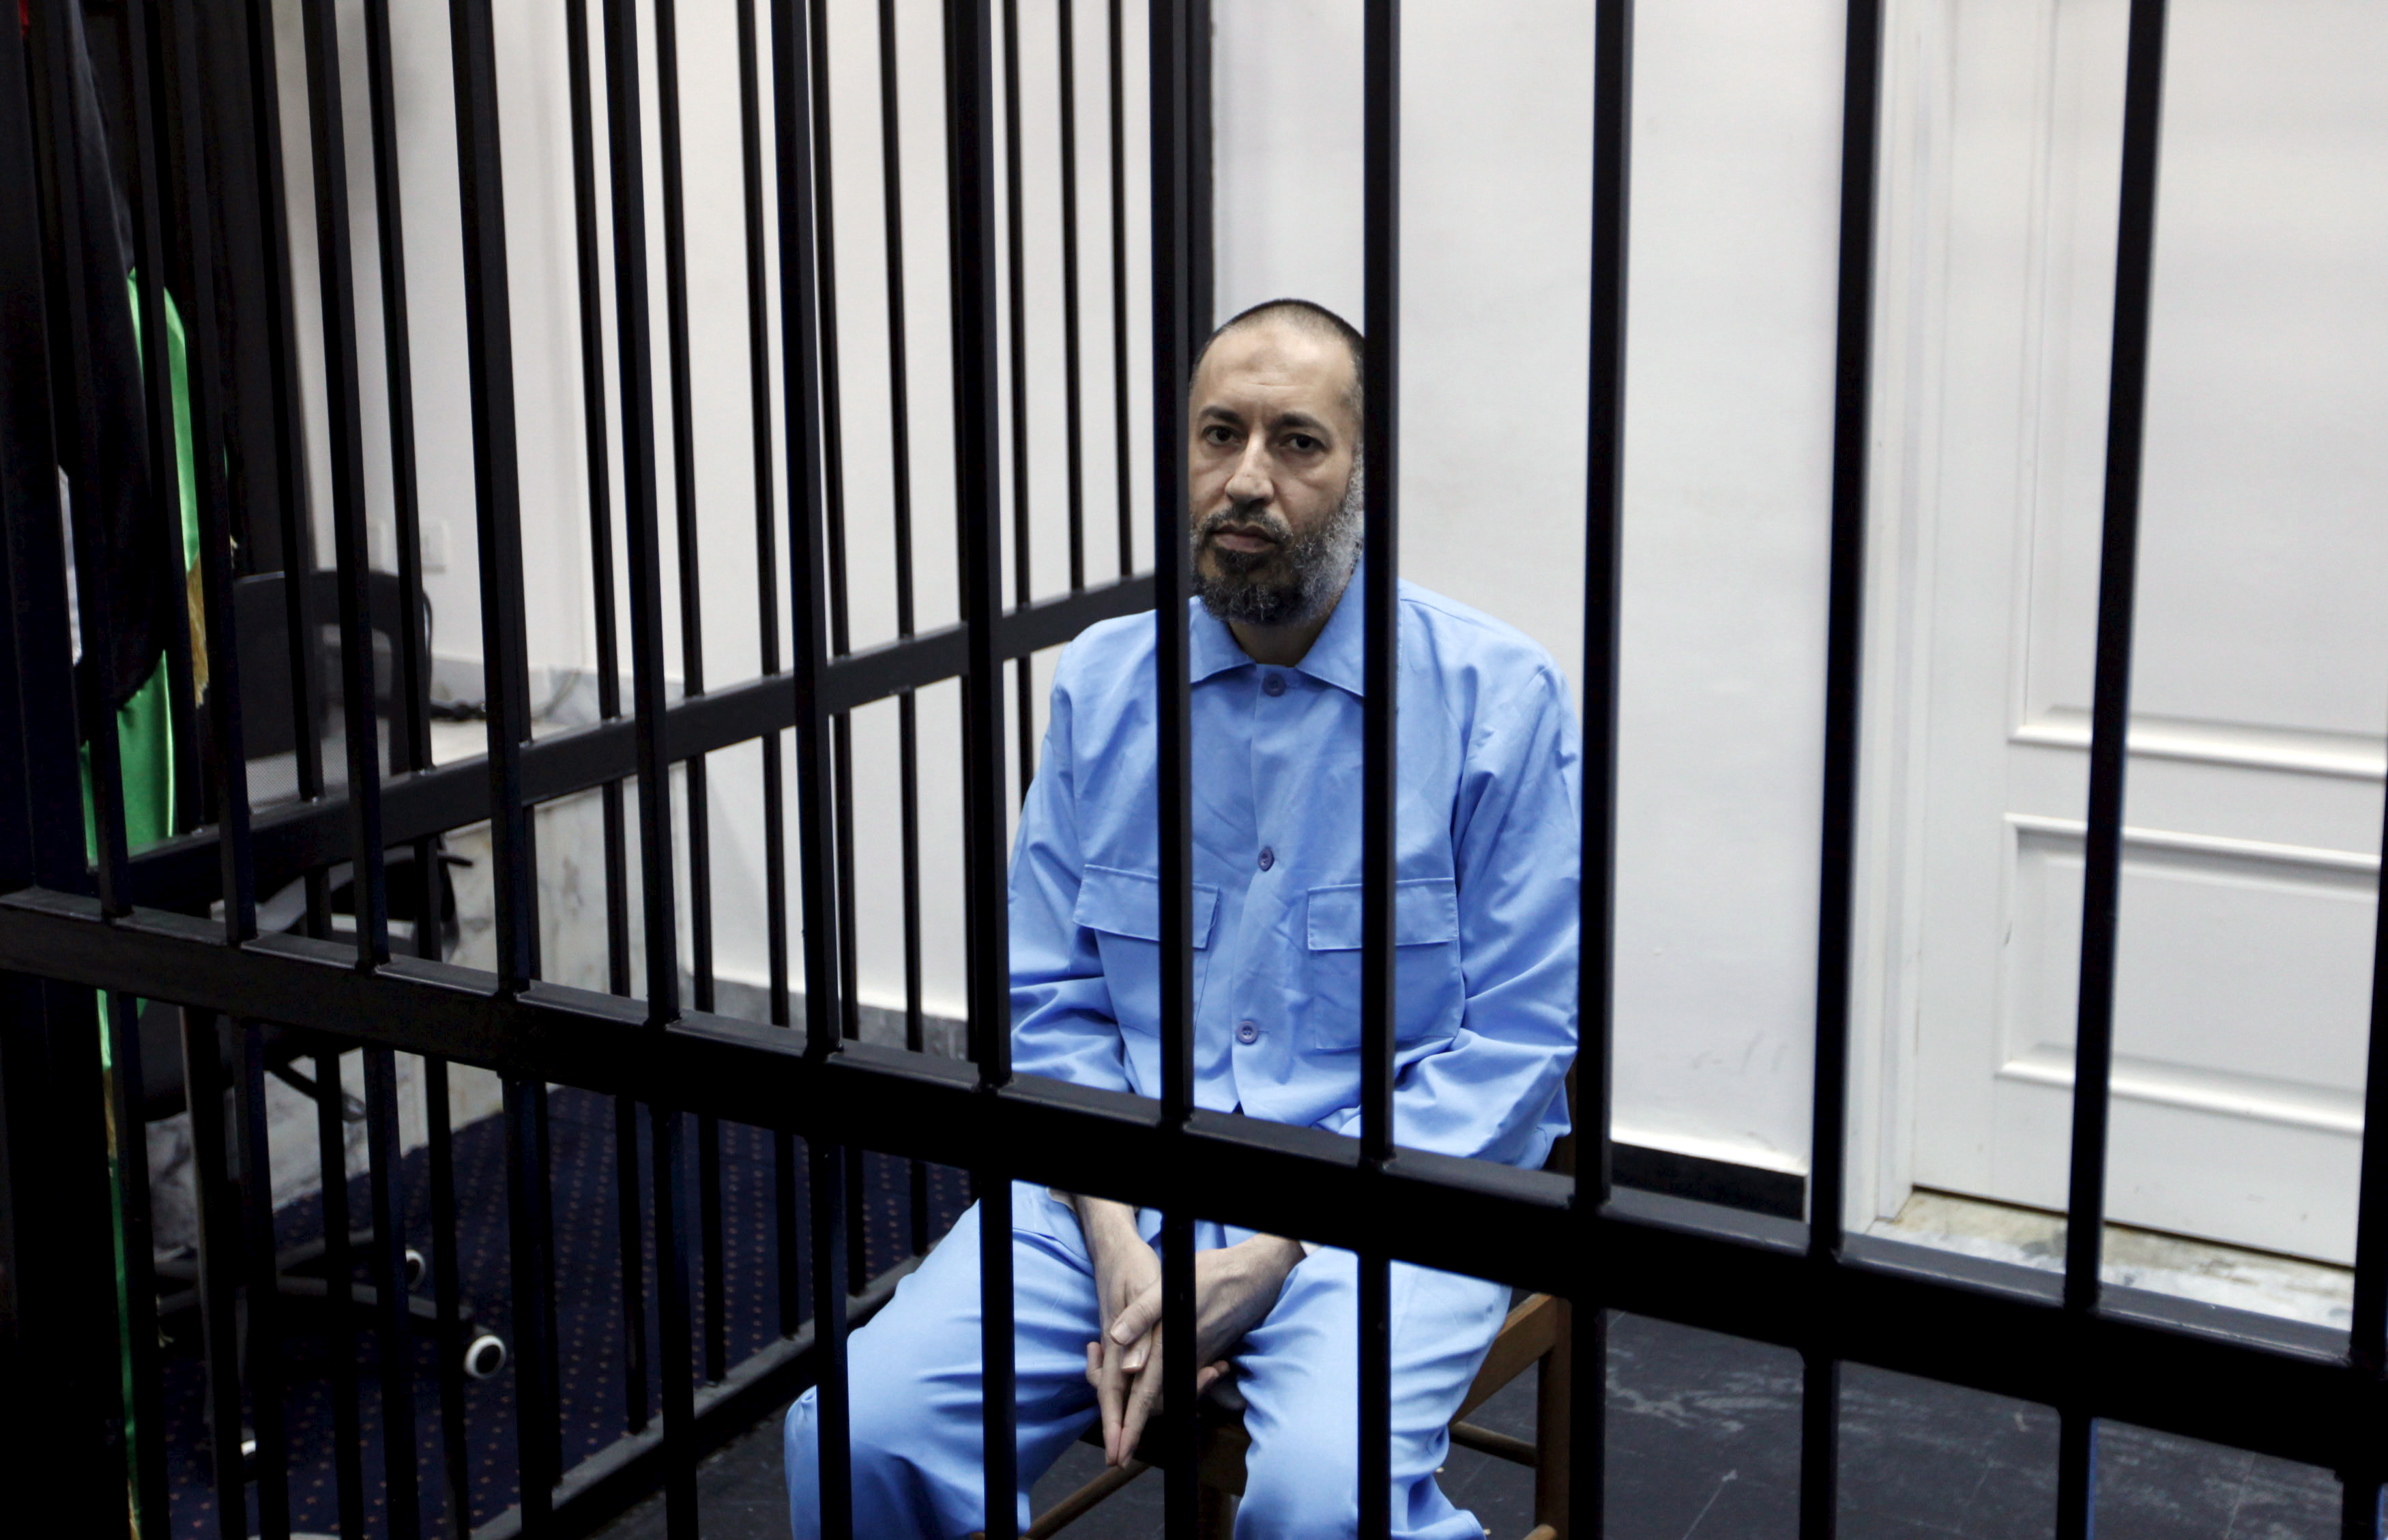 Saadi Gaddafi, son of Muammar Gaddafi, sits behind bars during a hearing at a courtroom in Tripoli, Libya February 7, 2016. REUTERS/Ismail Zitouny/File Photo